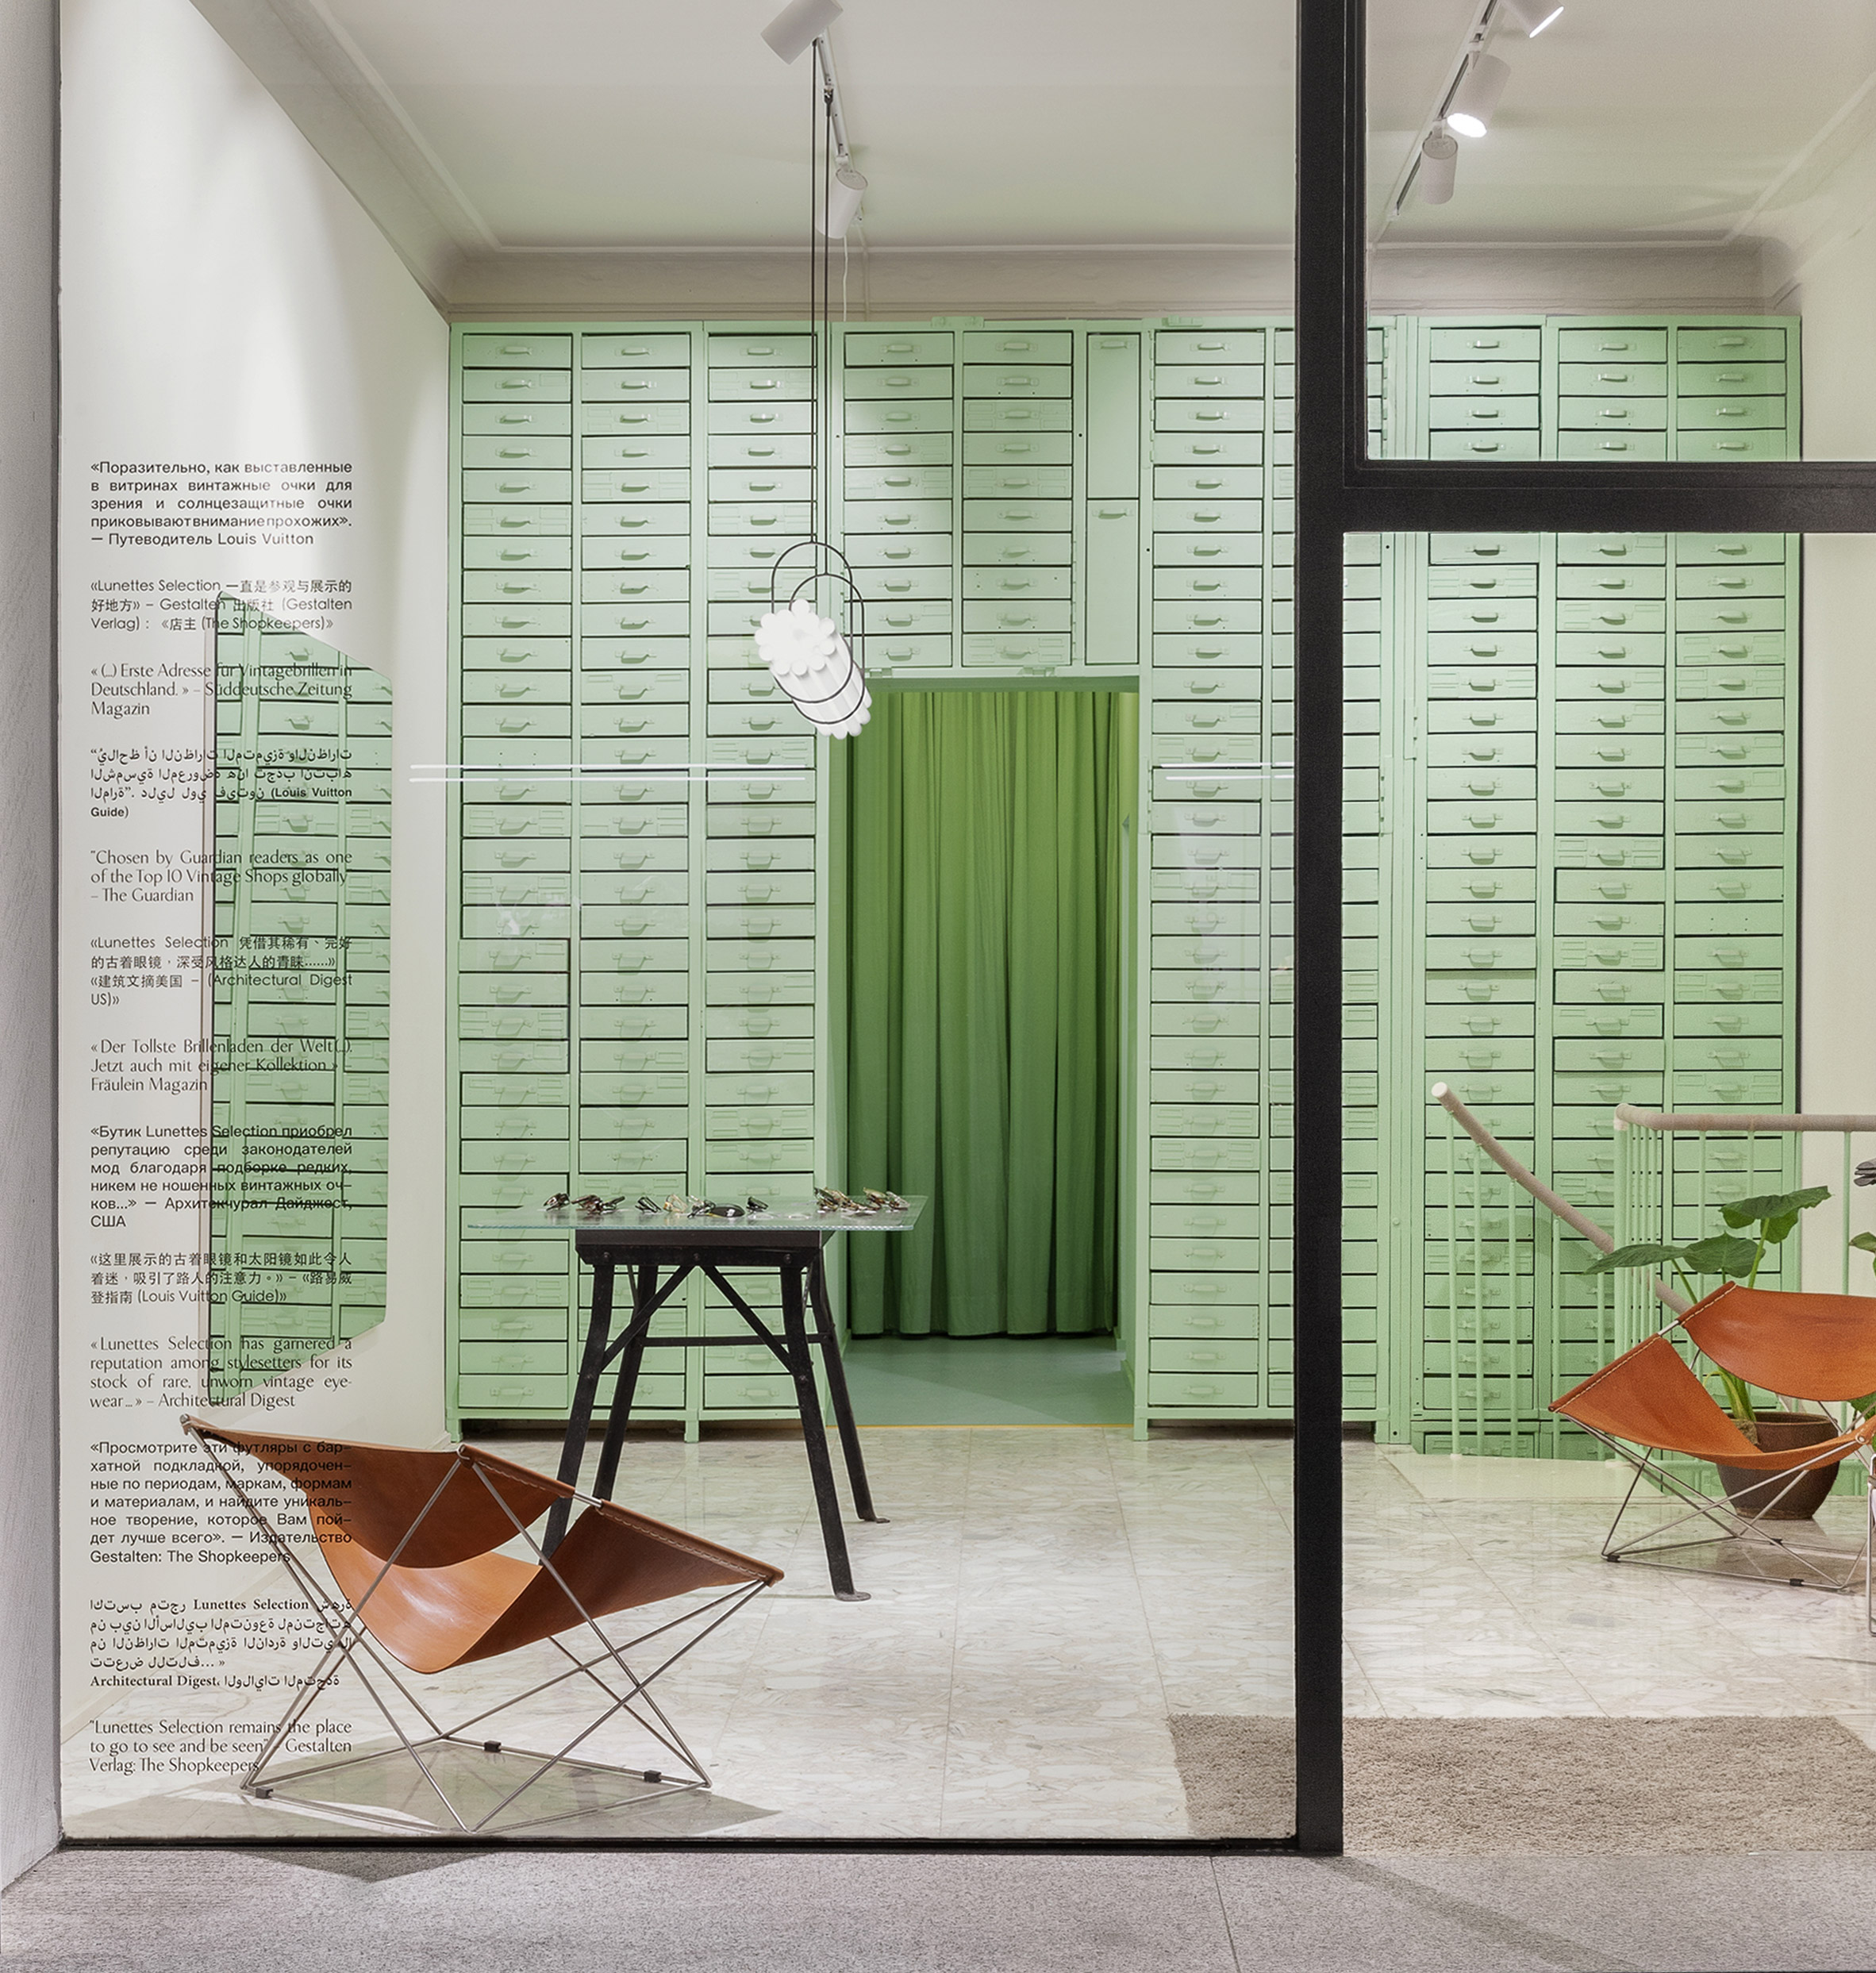 Zuidoost Leeuw Konijn Oskar Kohnen Studio adds pastel cabinetry to Lunettes Selection store